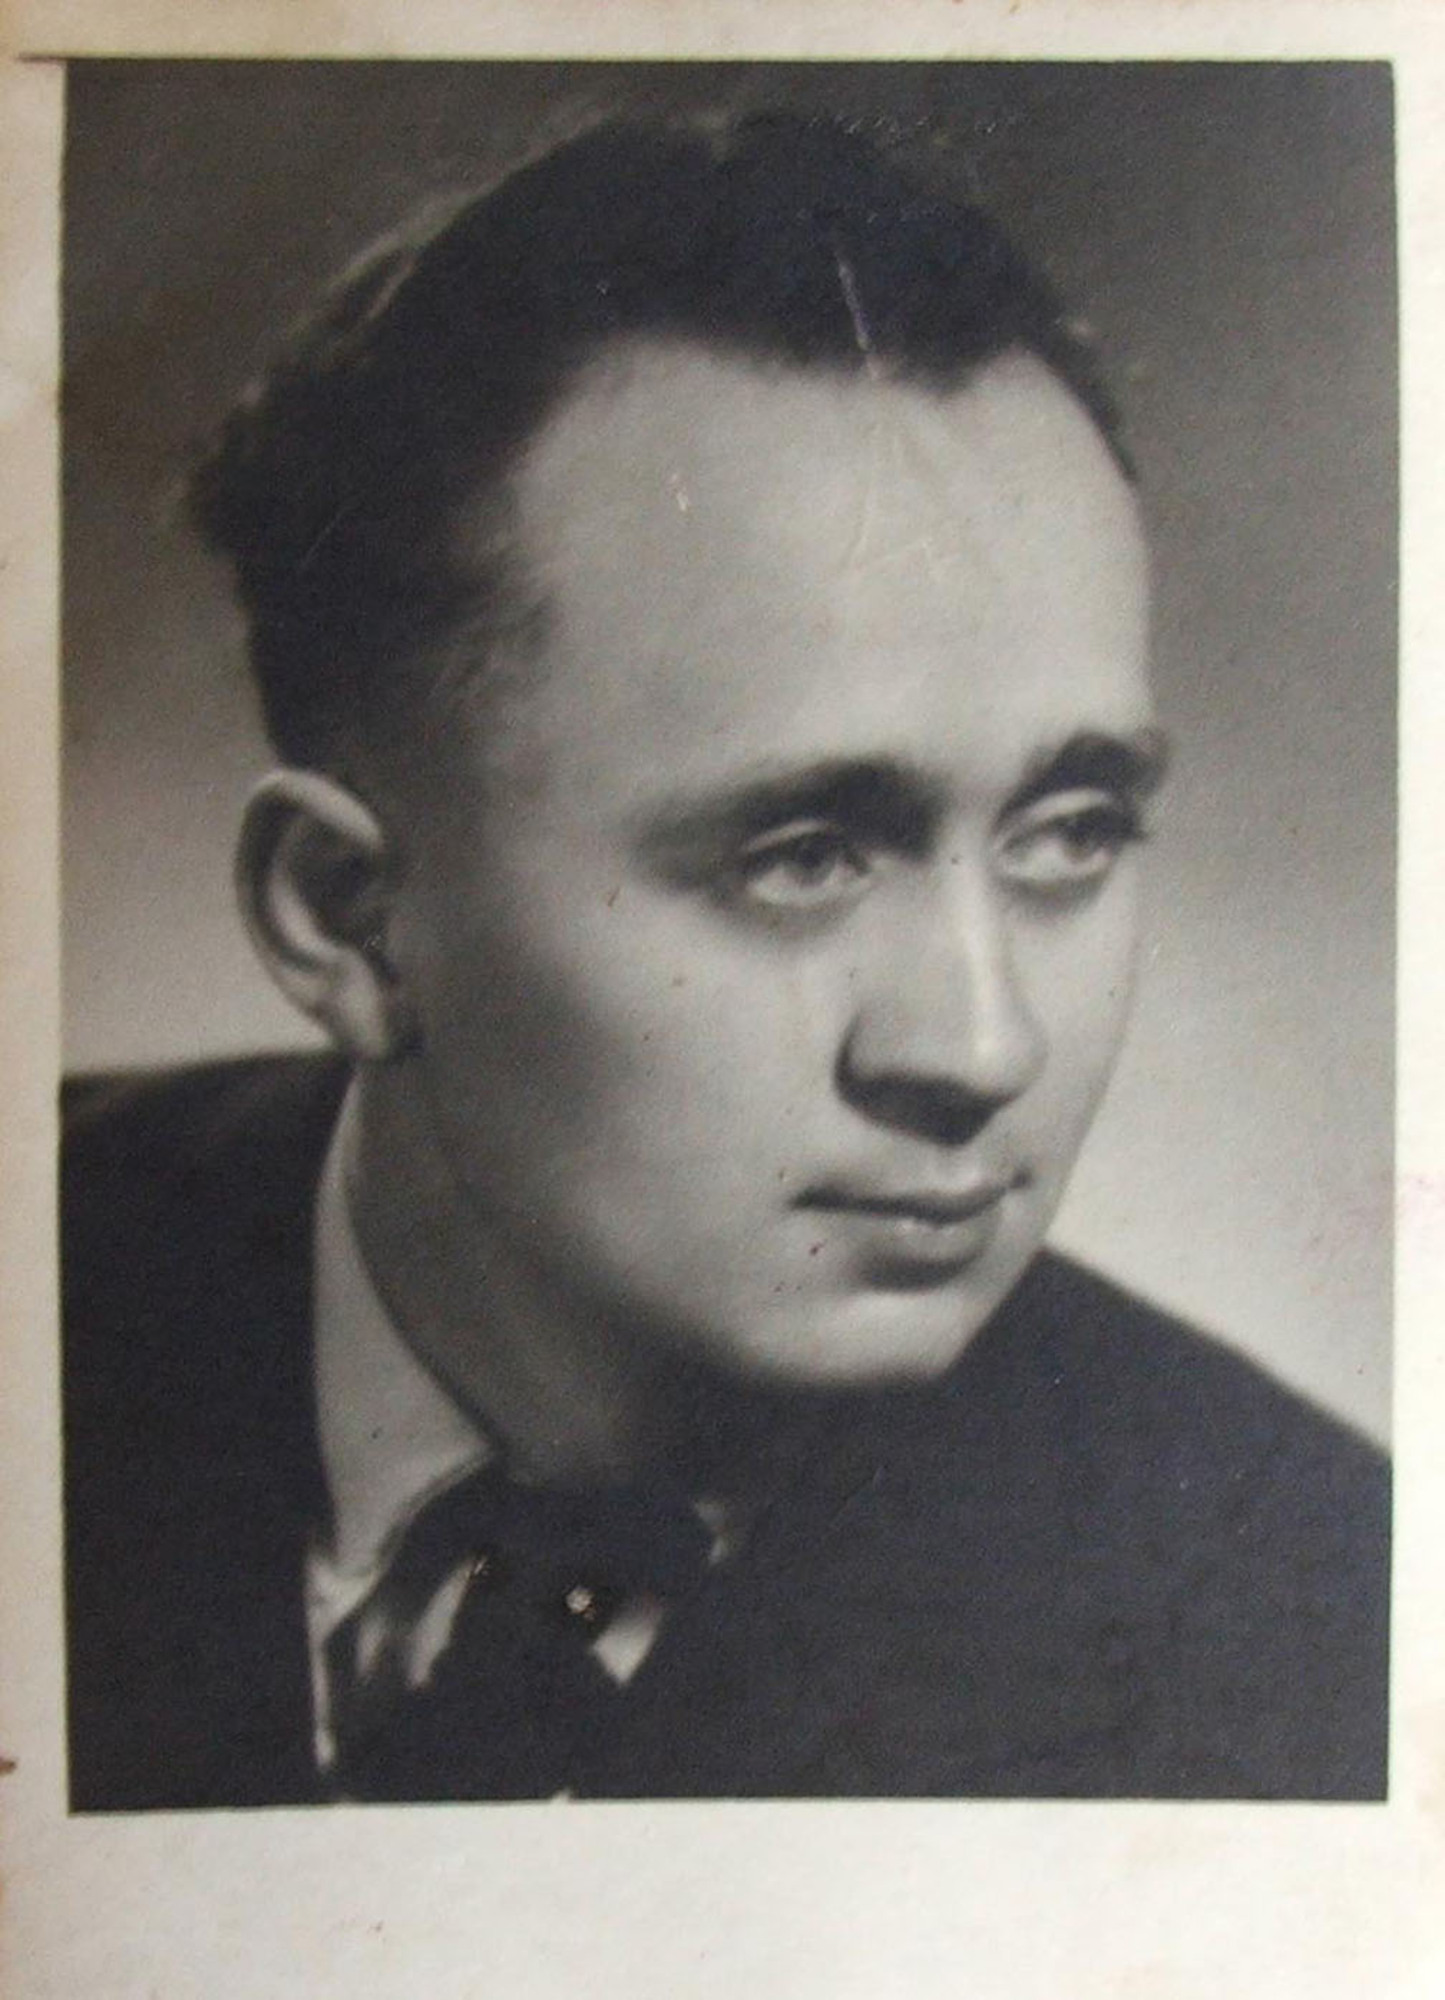 Jaromír Janza in the 1950s